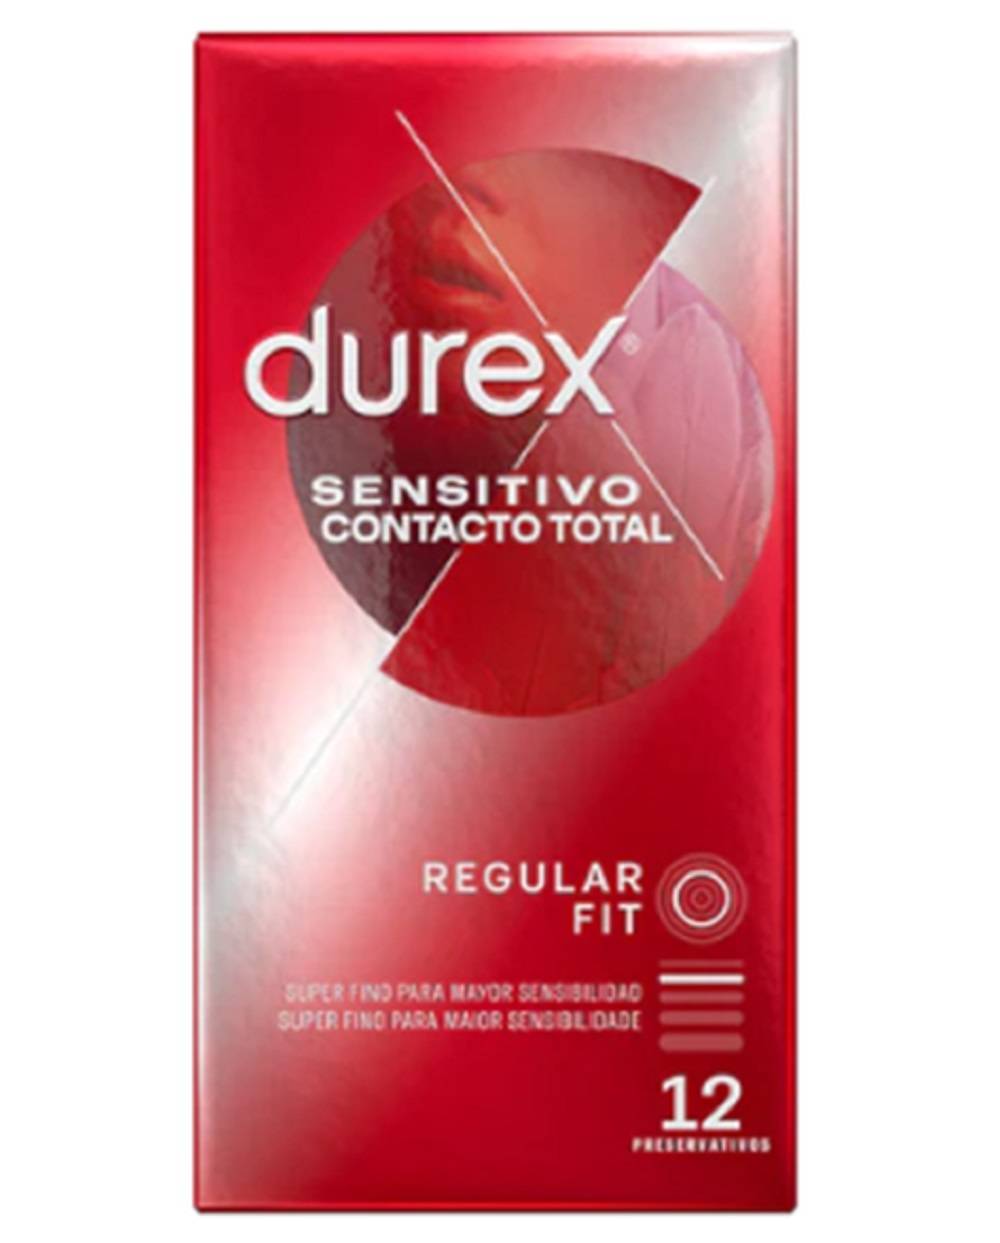 Durex preservativos sensitivo contacto total 12 u n